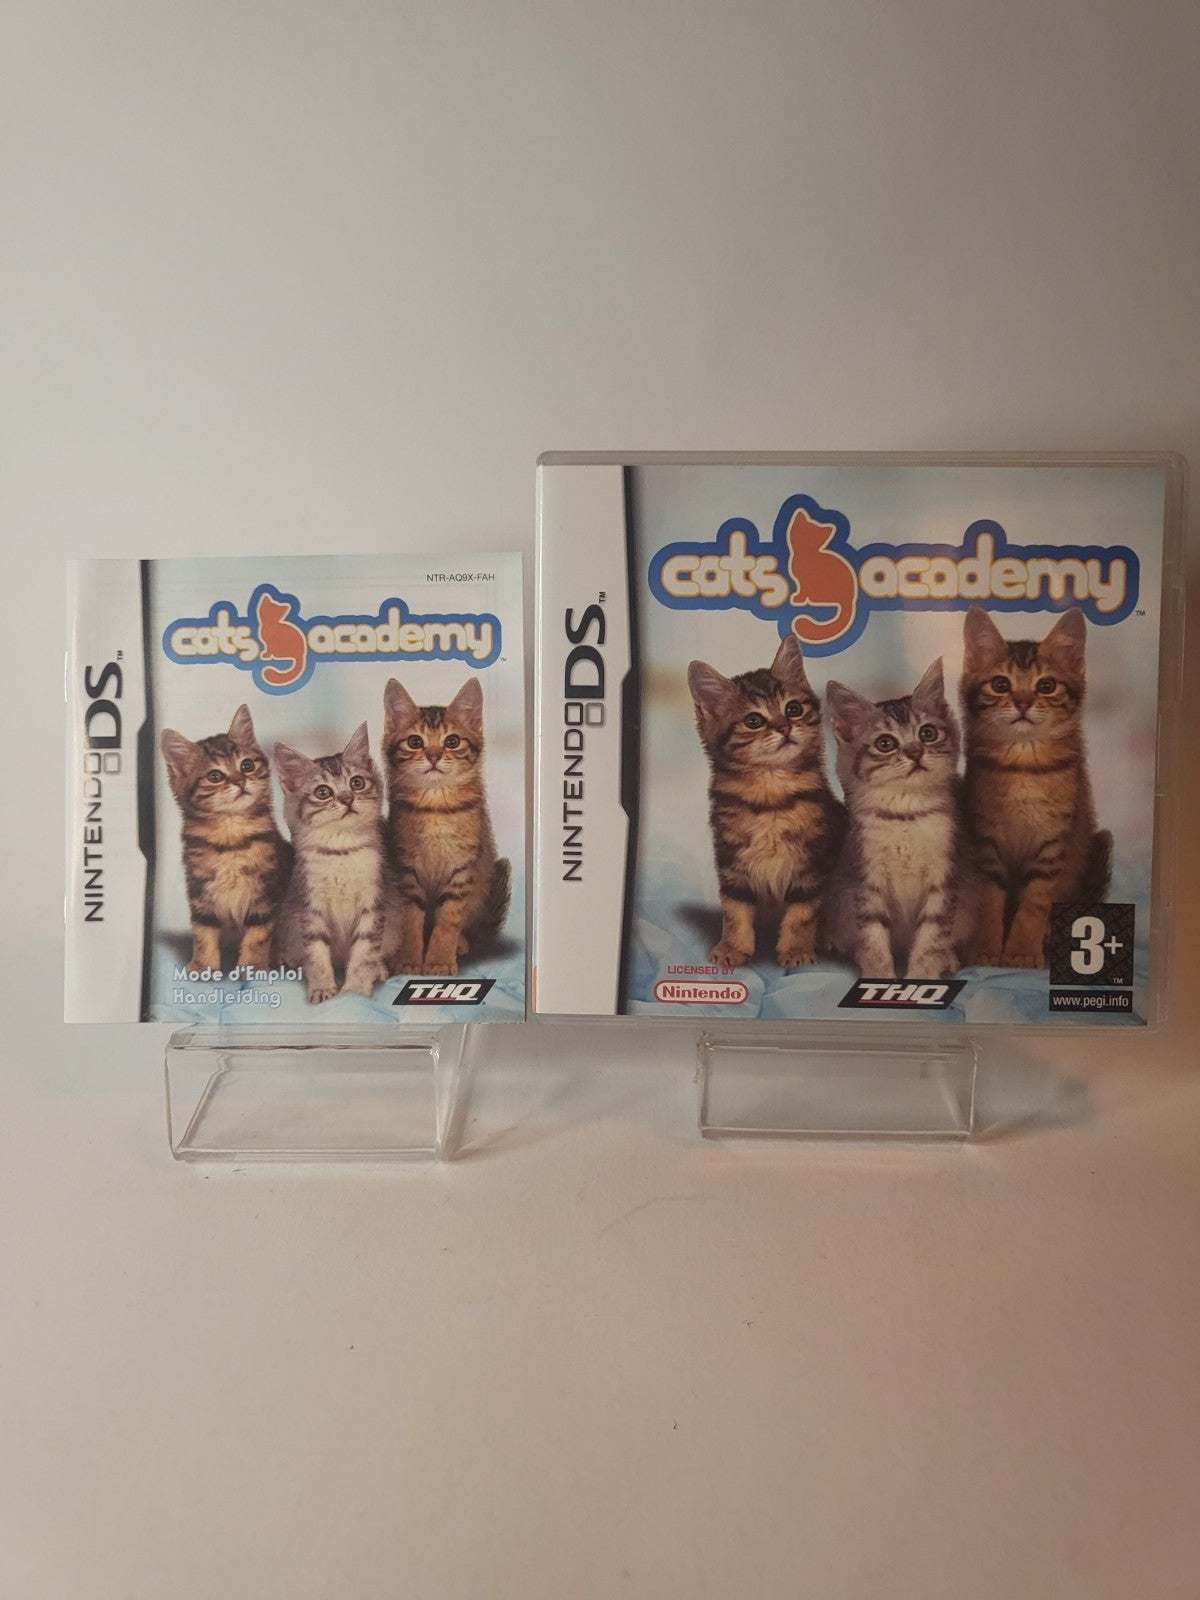 Cats Academy Nintendo DS